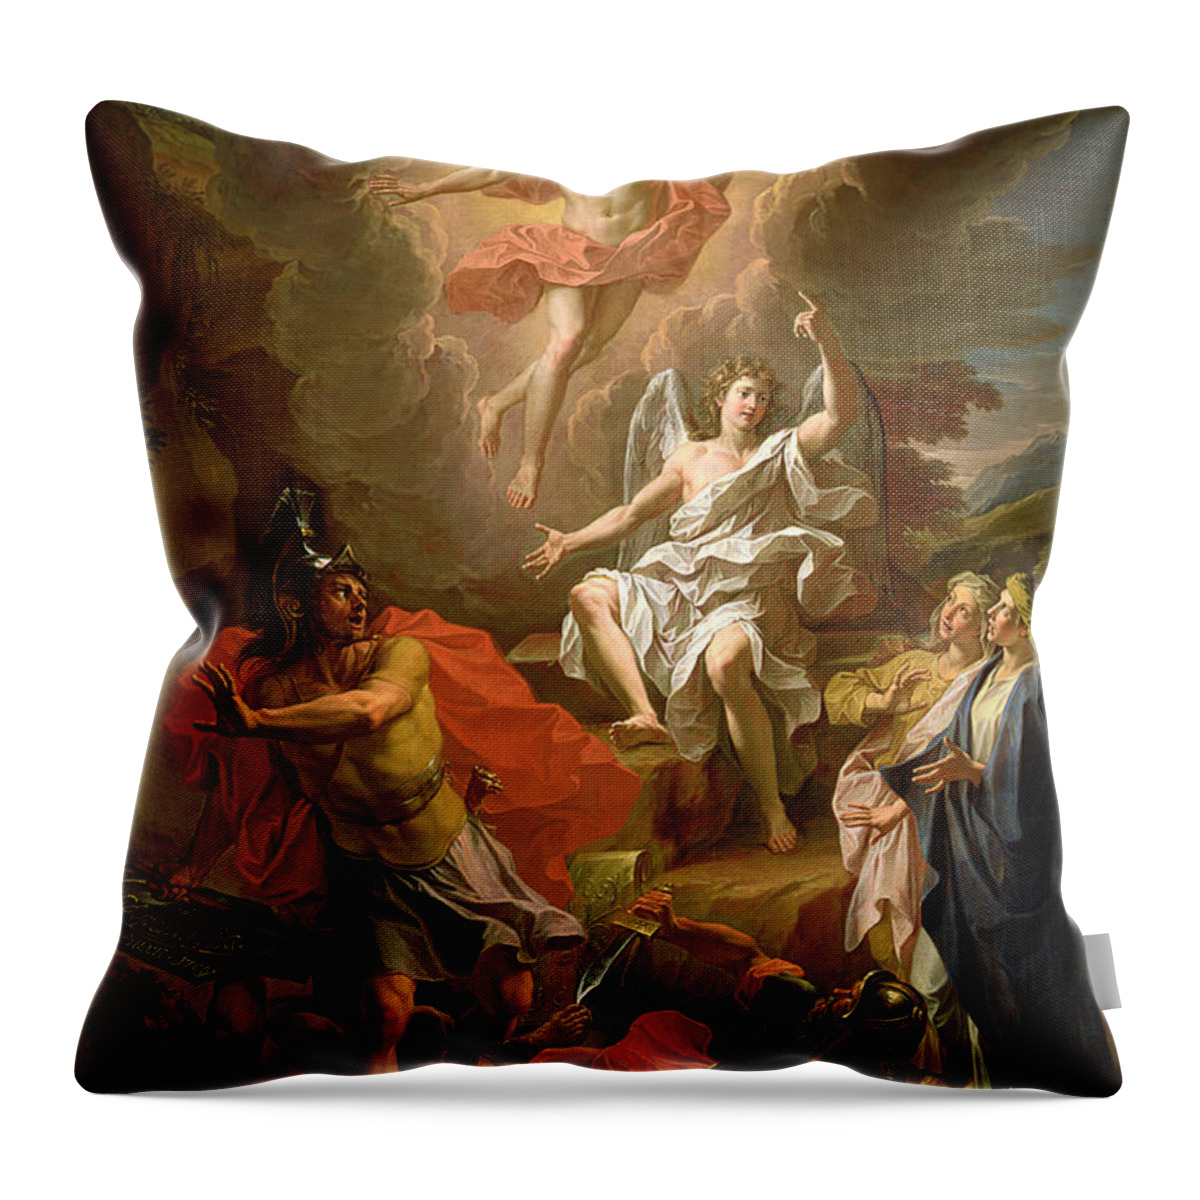 The Resurrection Of Christ Throw Pillow featuring the painting The Resurrection of Christ by Noel Coypel